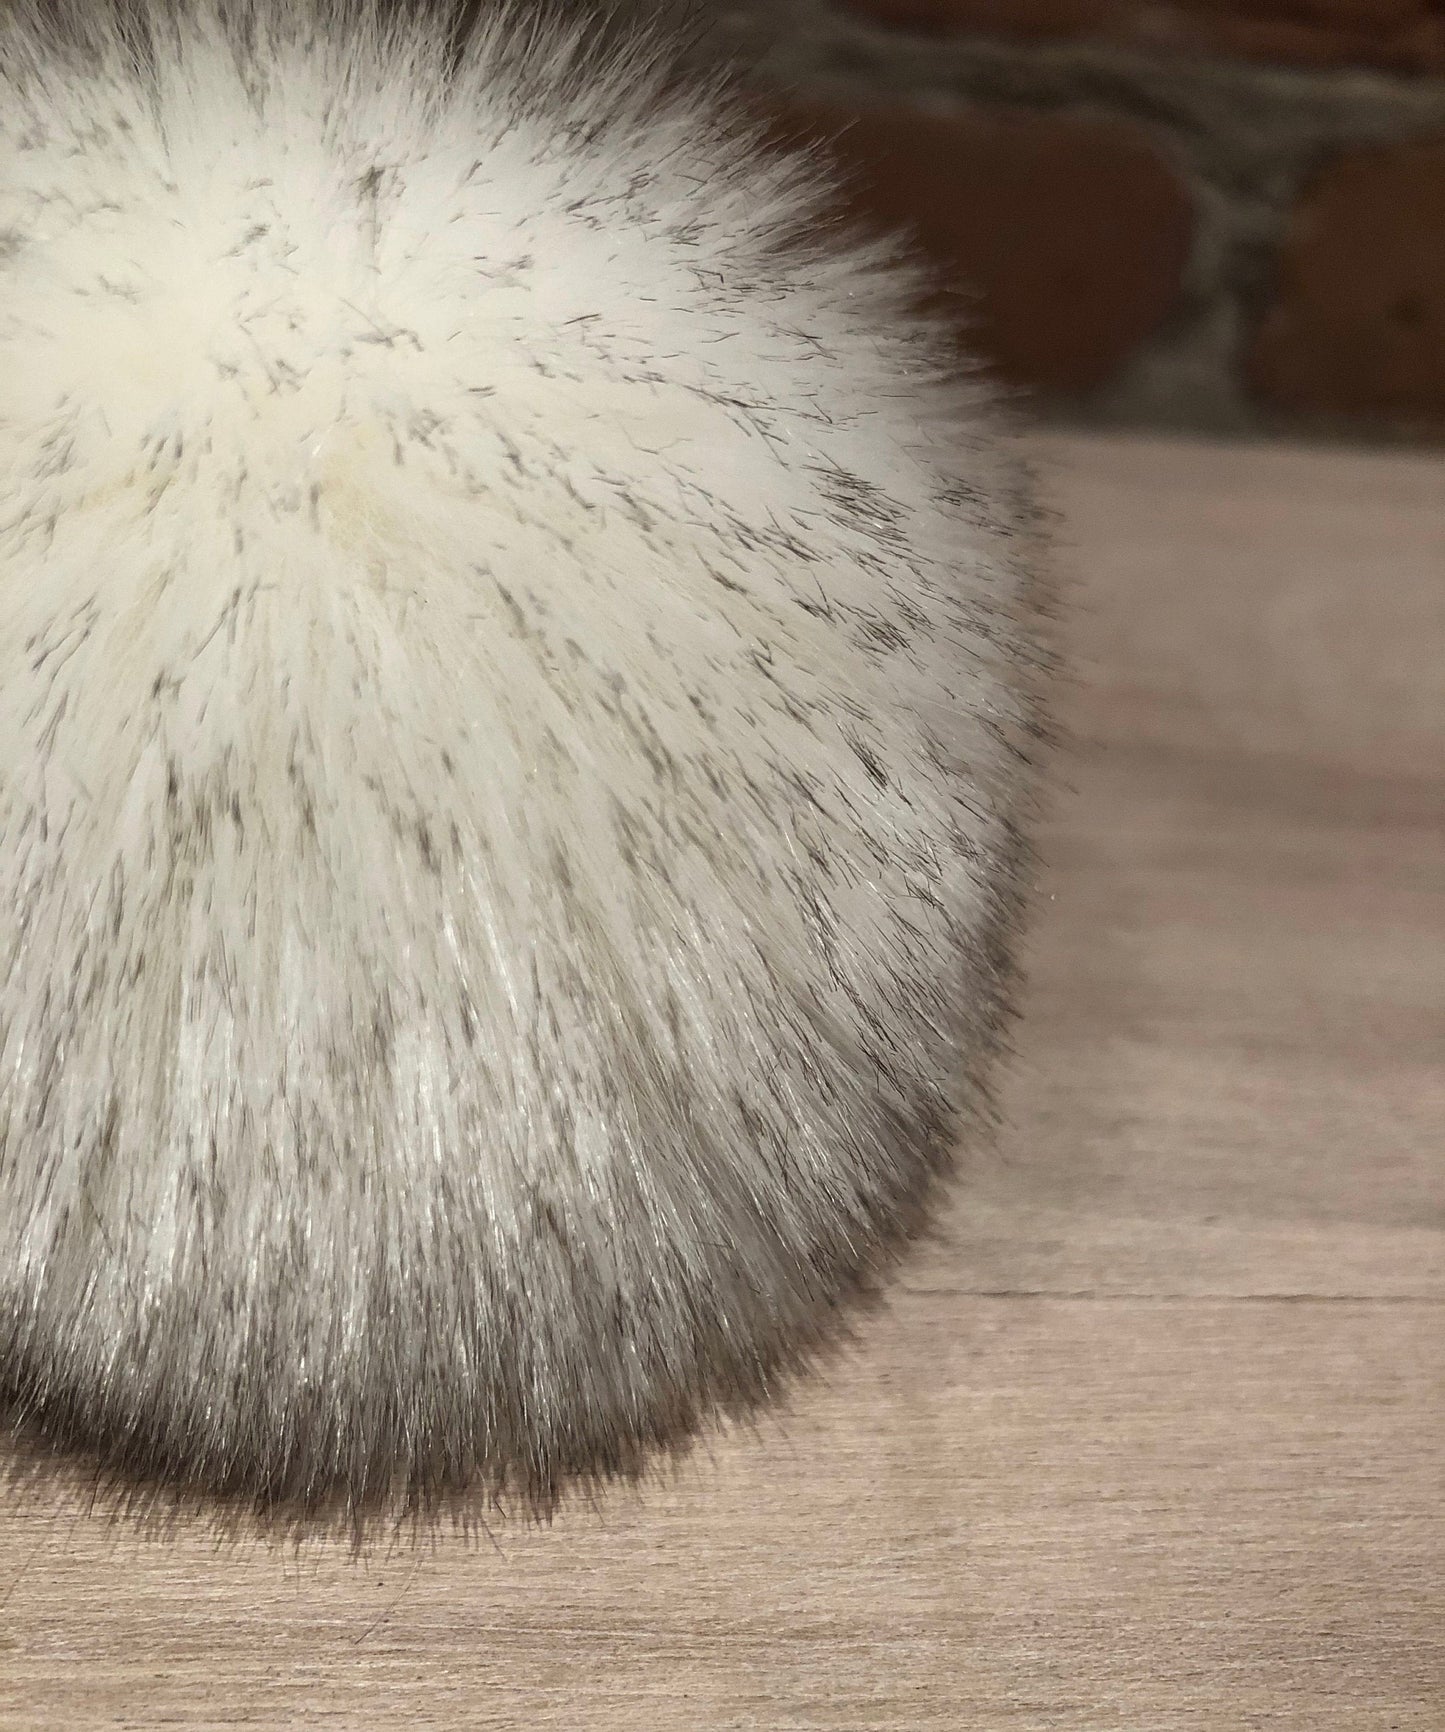 Ivory White Chinchilla Faux Fur Pom, 3.5 Inch